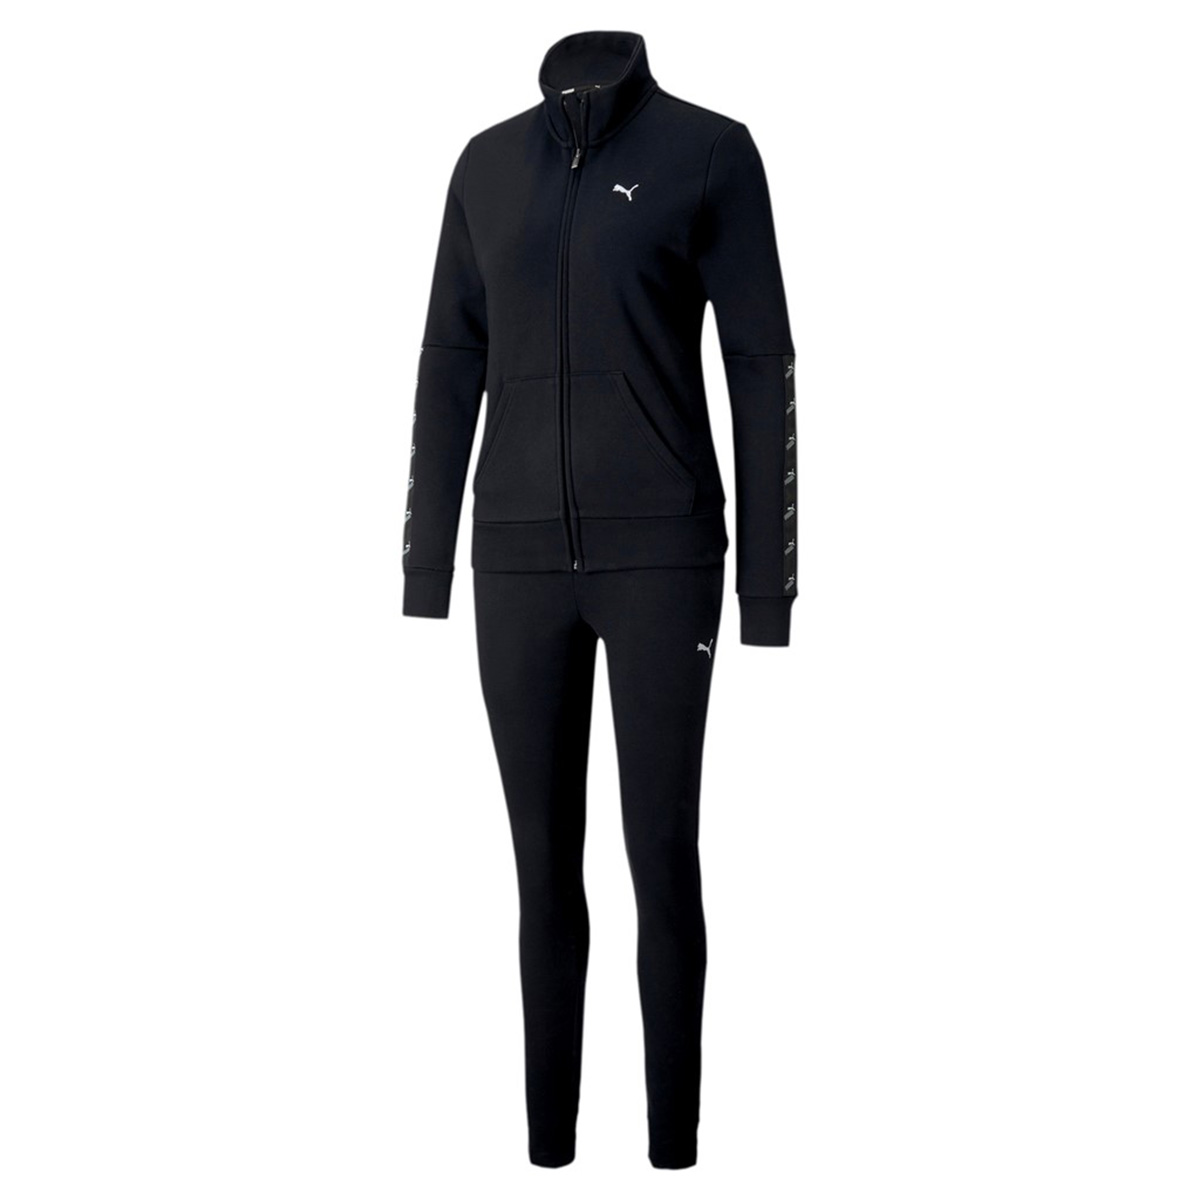 PUMA Damen Amplified Sweat Suit CL Trainingsanzug Jogginganzug 583658 schwarz